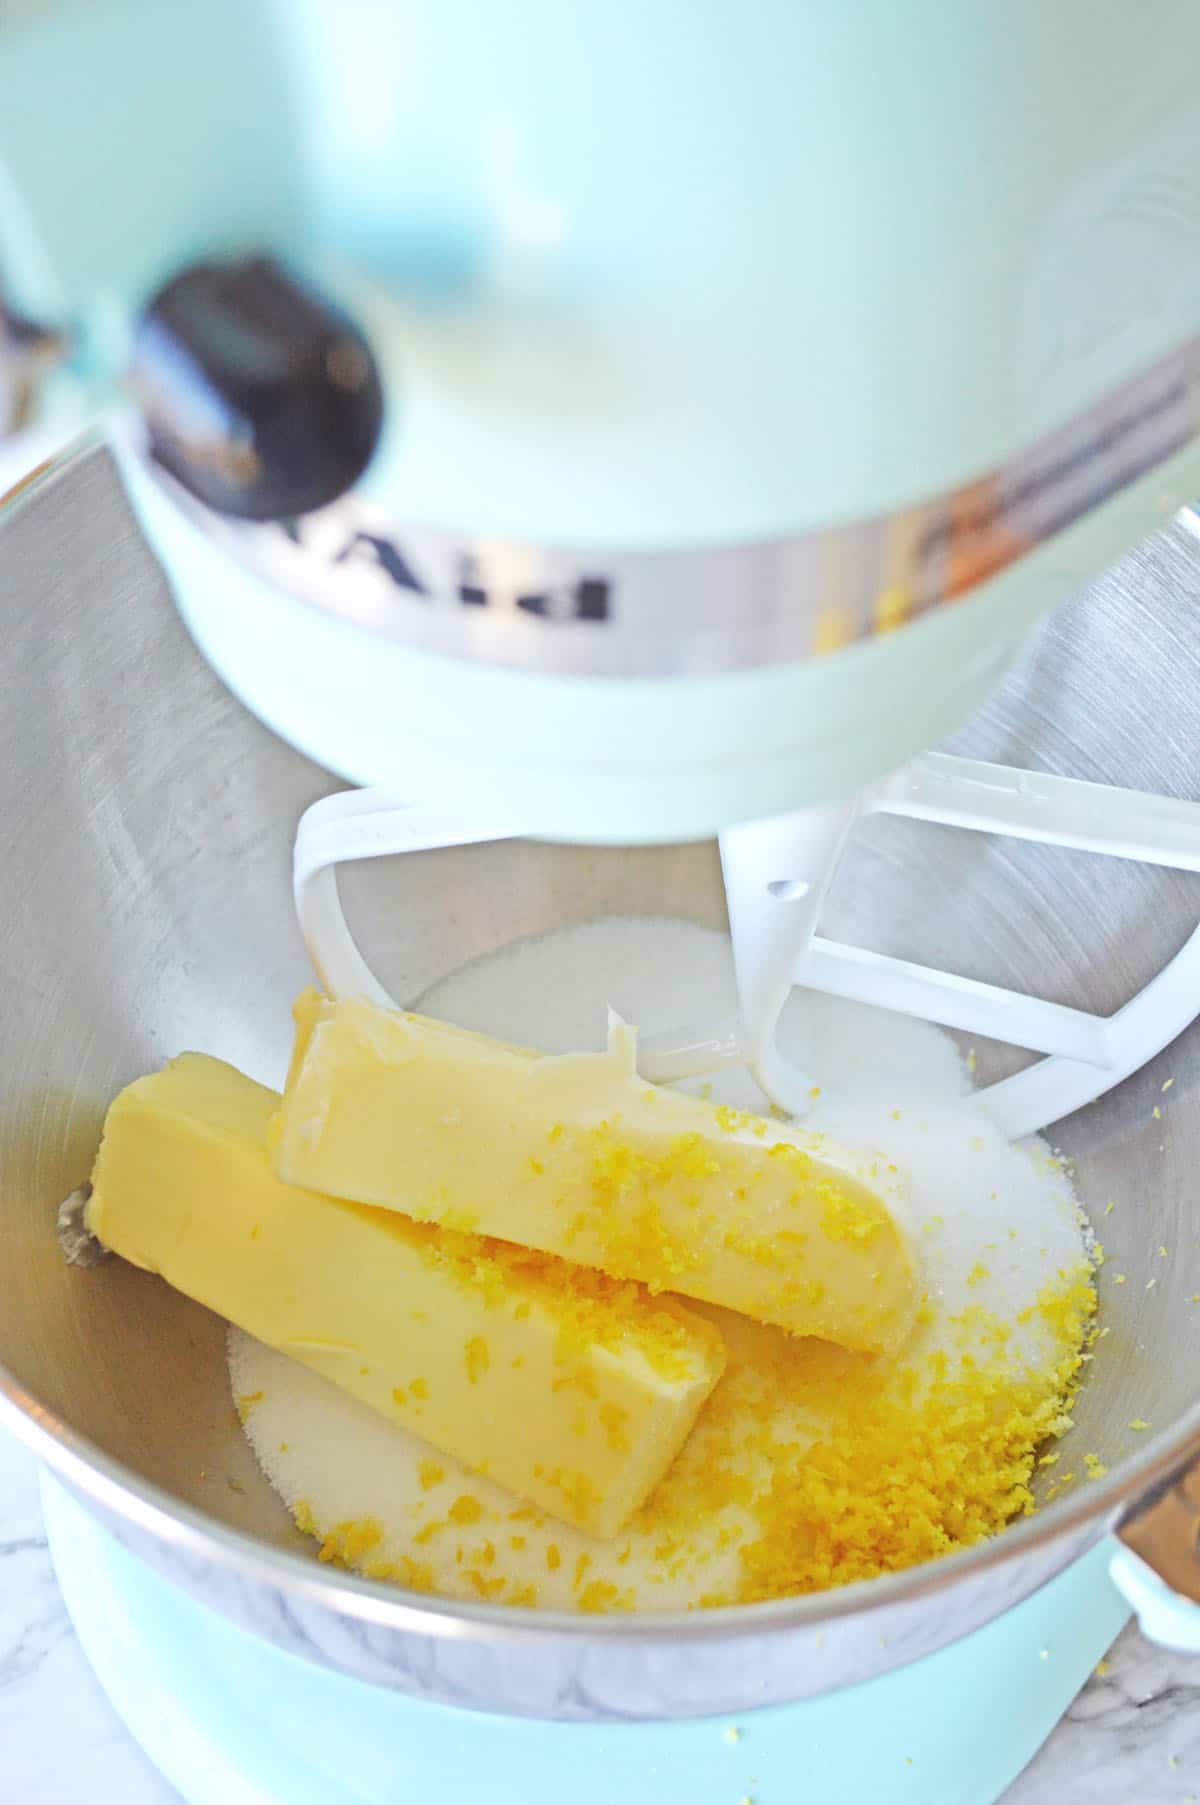 Butter, sugar, vanilla, and lemon in mixer before mixing.